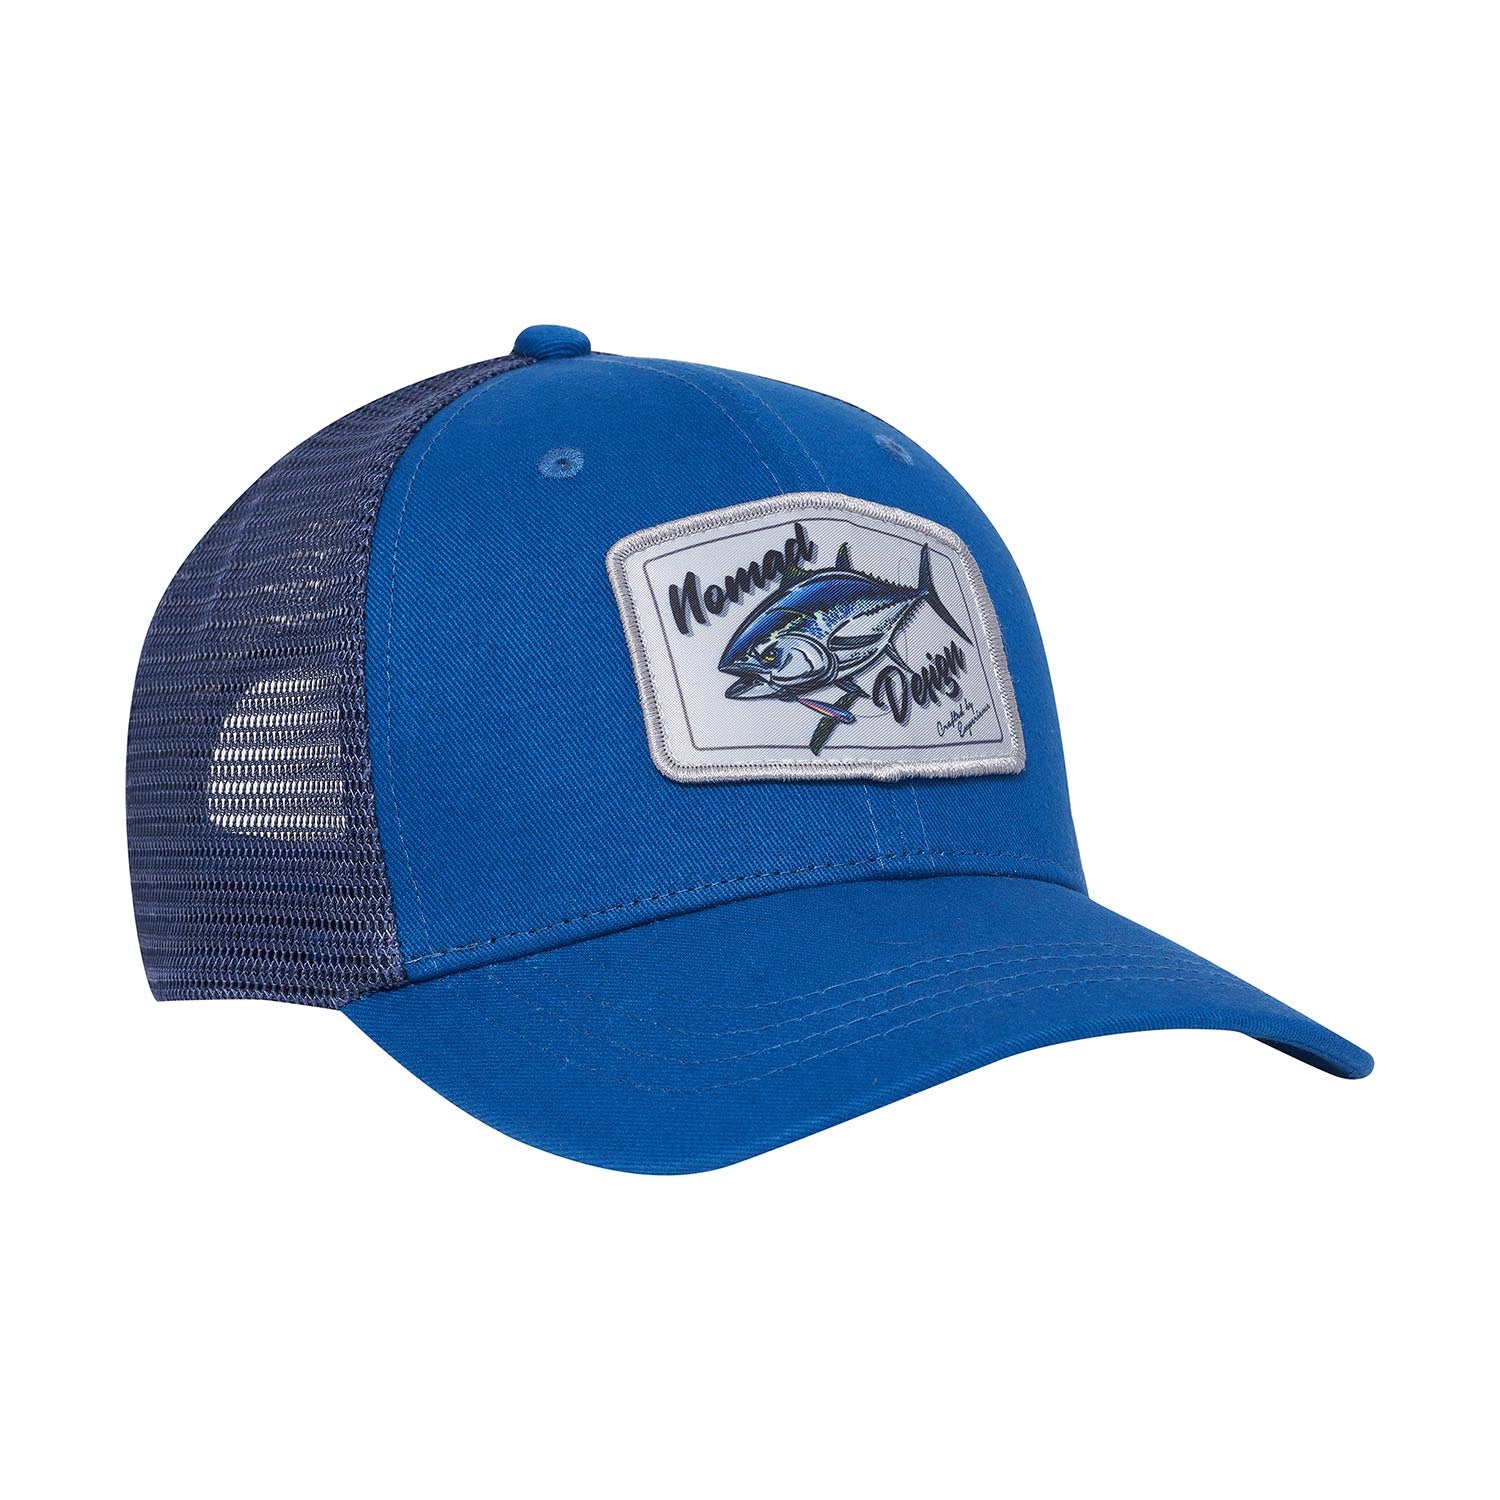 Bluefin USA Patch Hat